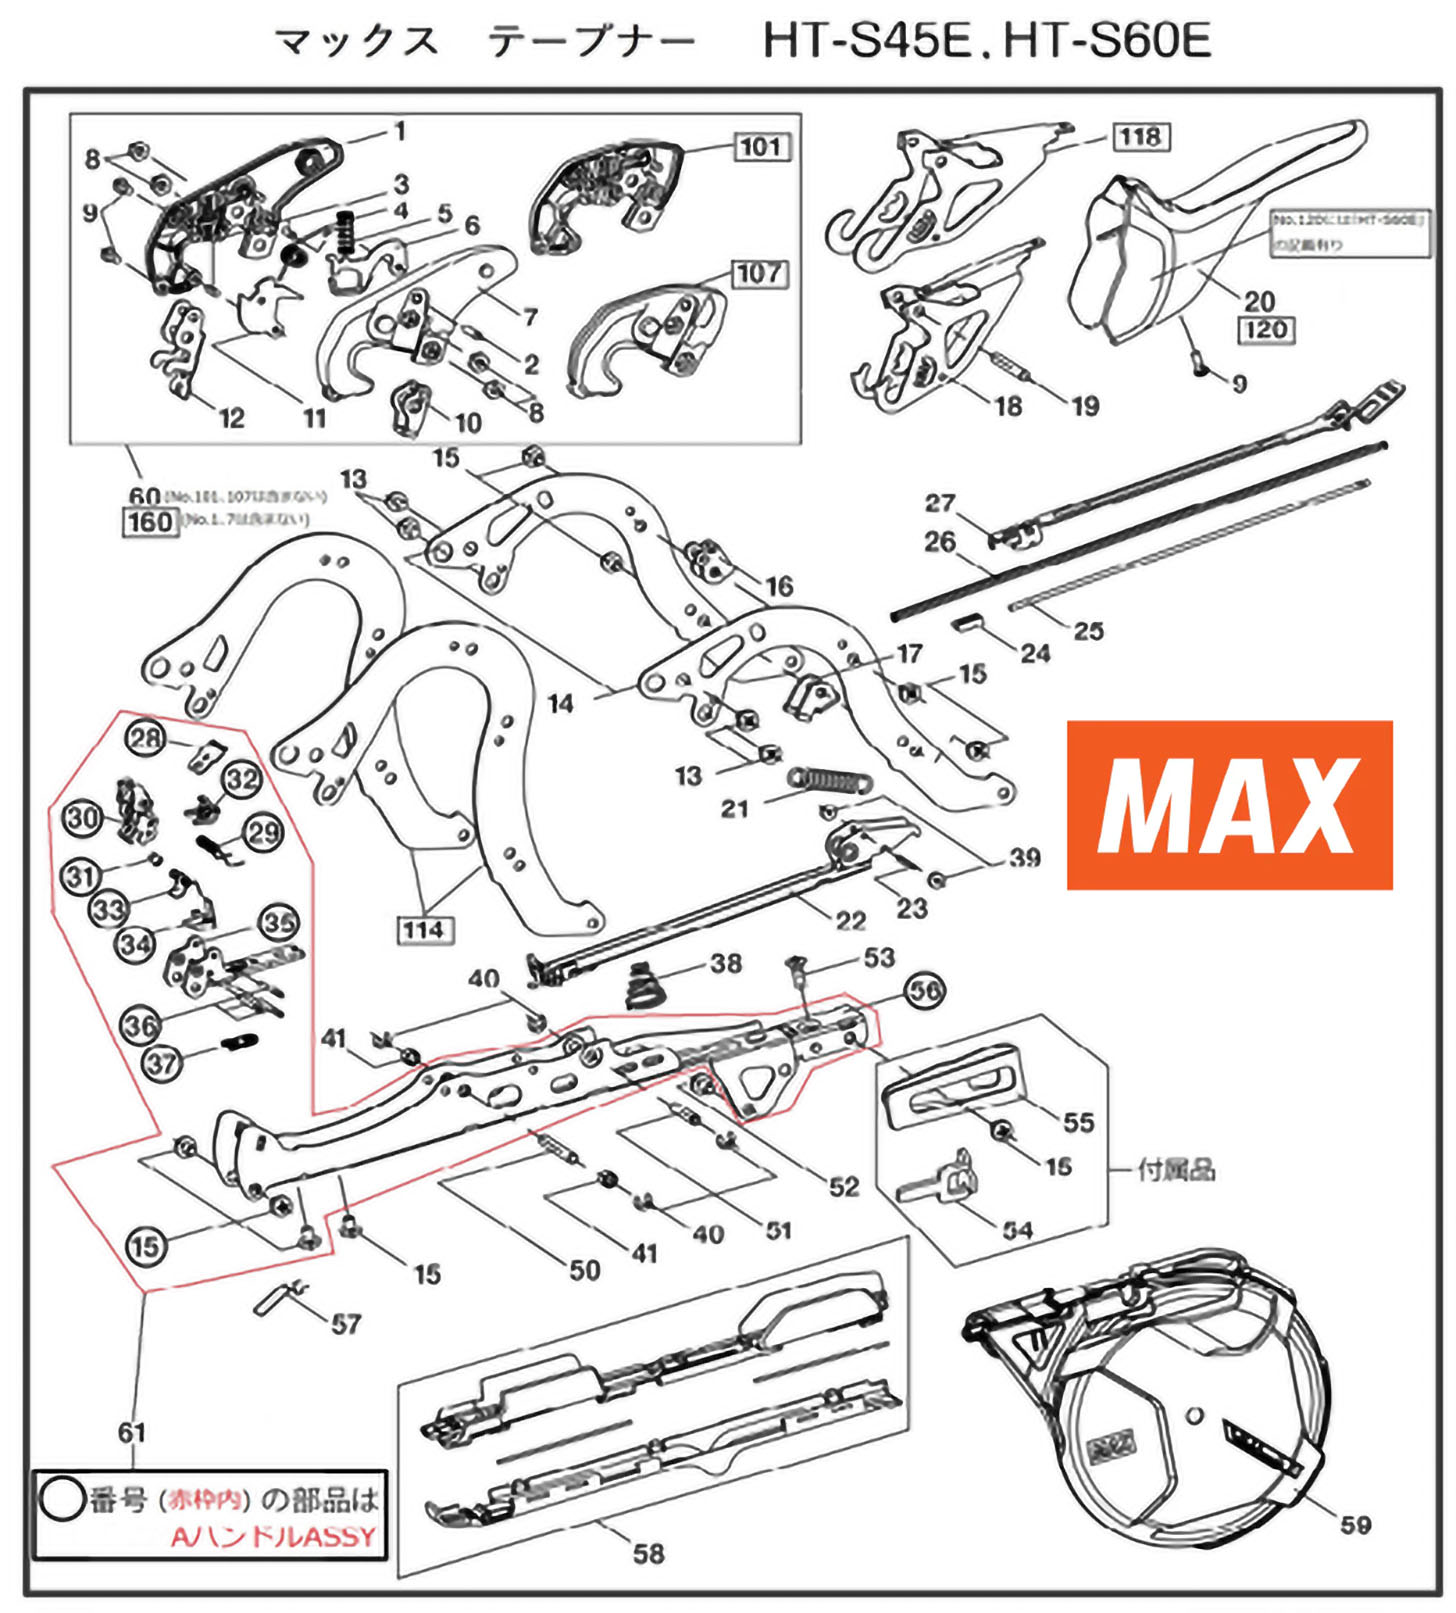 MAX Tapener Part HT11704 GRIP(HT-S) Fits MAX HT-S45E #20